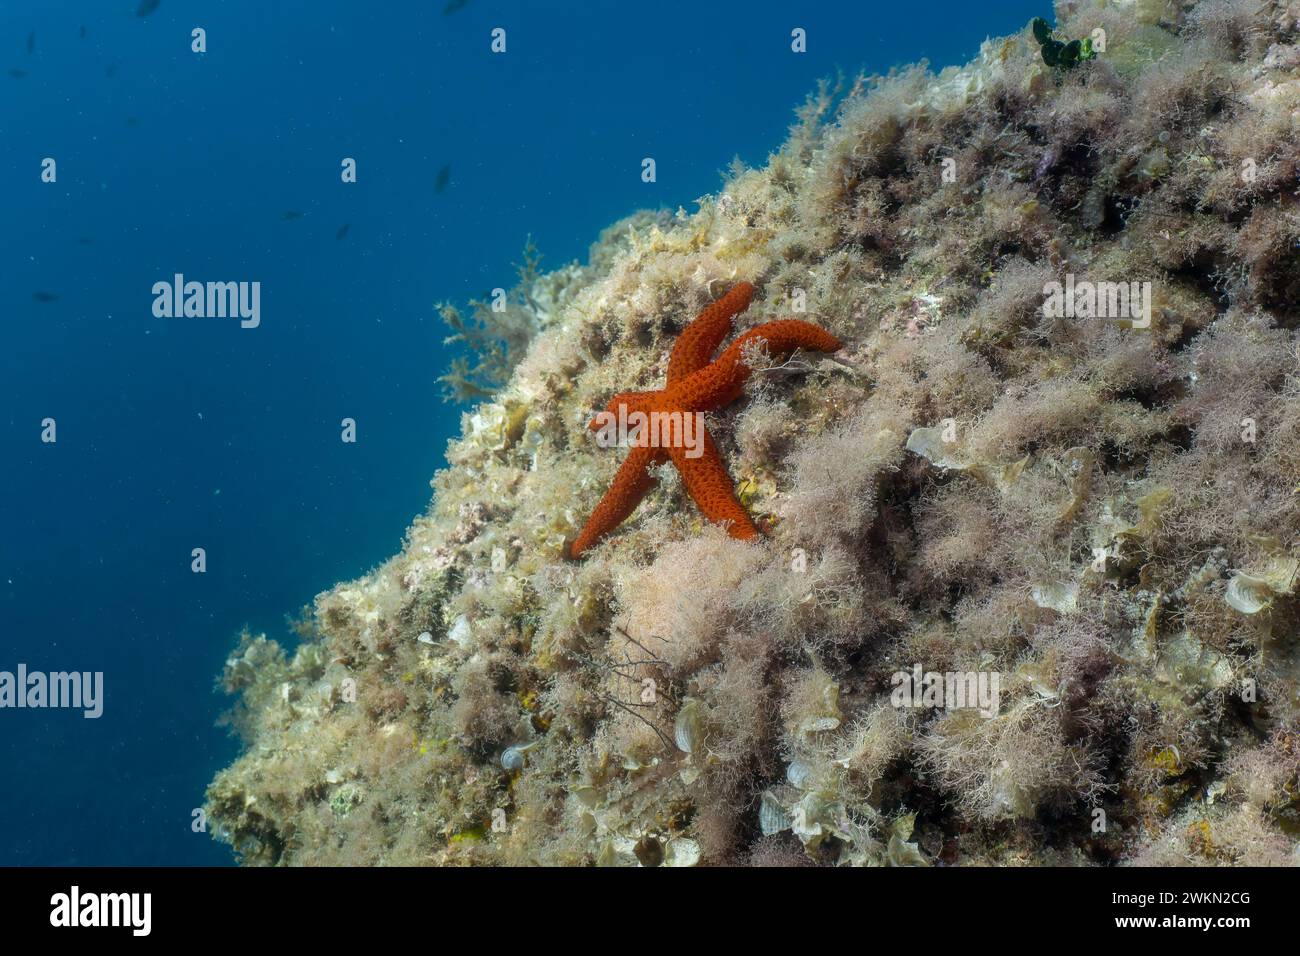 Una stella marina su una roccia ricoperta di alghe sott'acqua. Foto di alta qualità Foto Stock